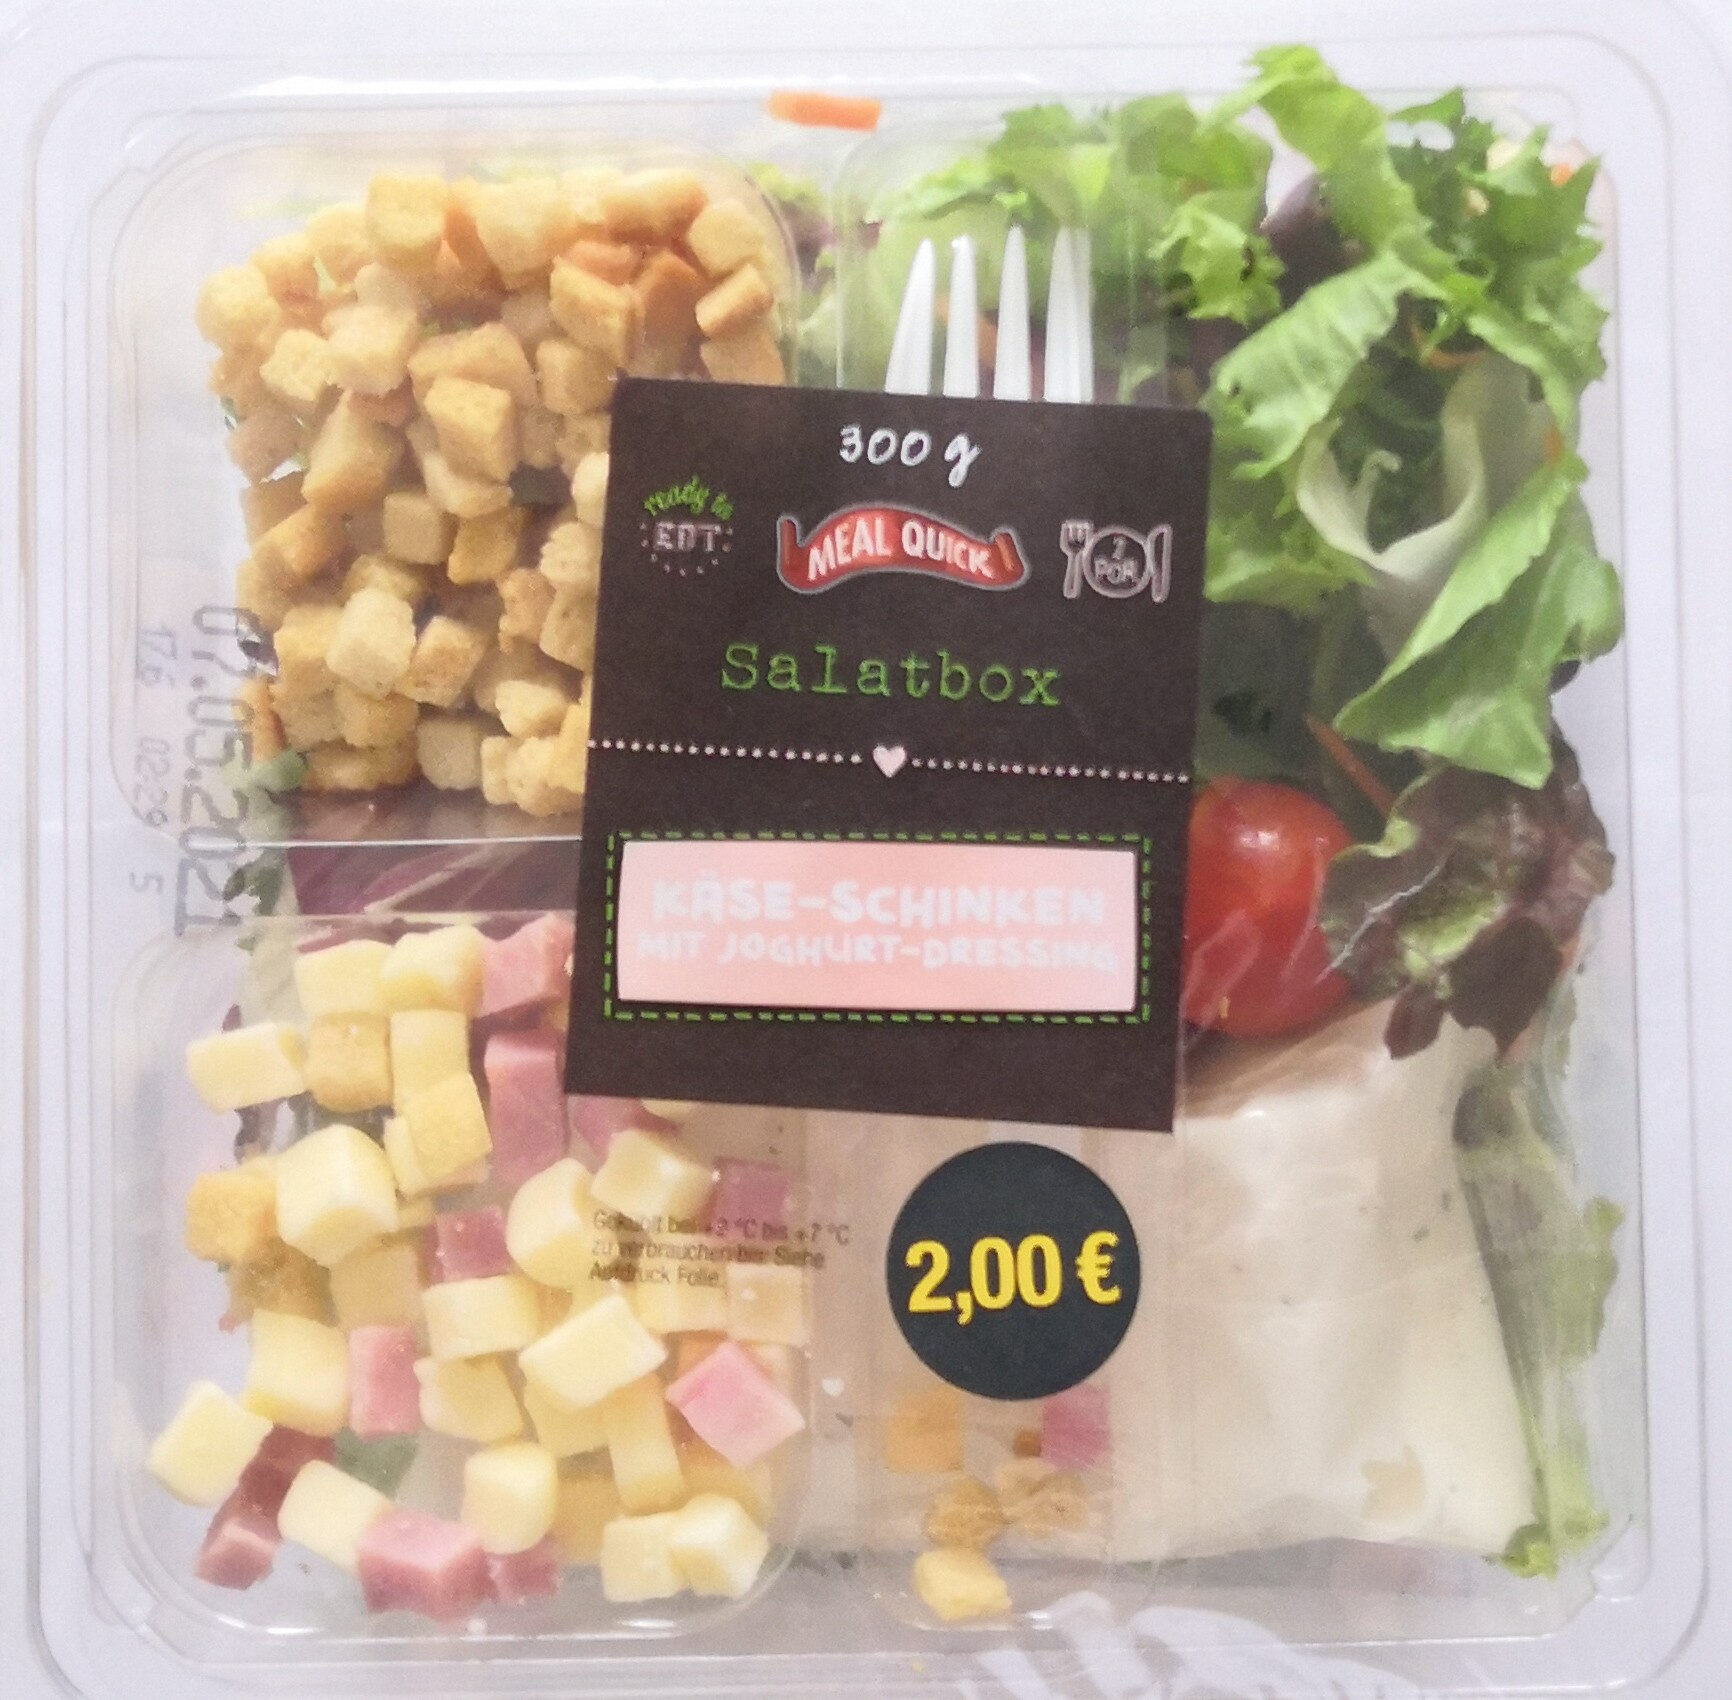 Meal Quick Salatbox Käse-Schinken mit Joghurt-Dressing - Produkt